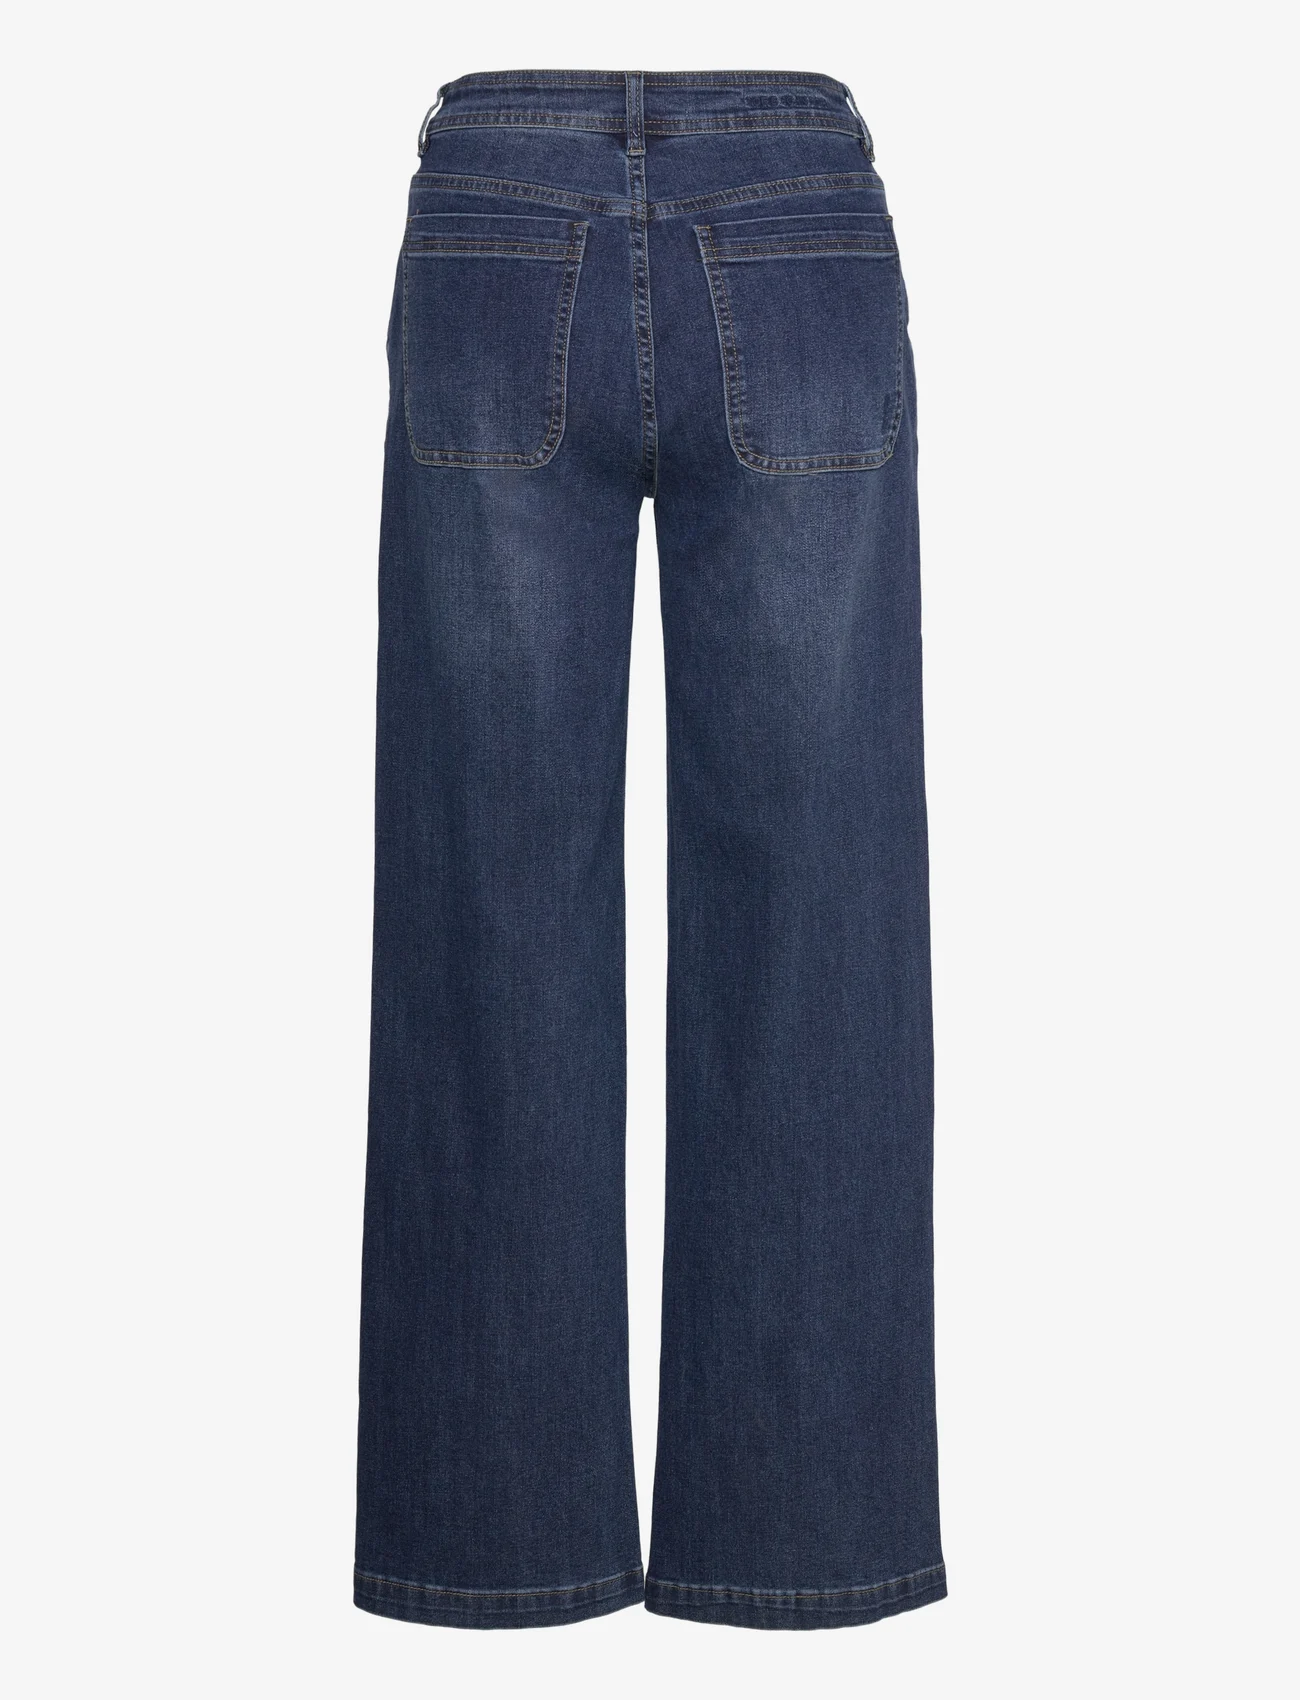 Sofie Schnoor - Jeans - wide leg trousers - dark denim blue - 1